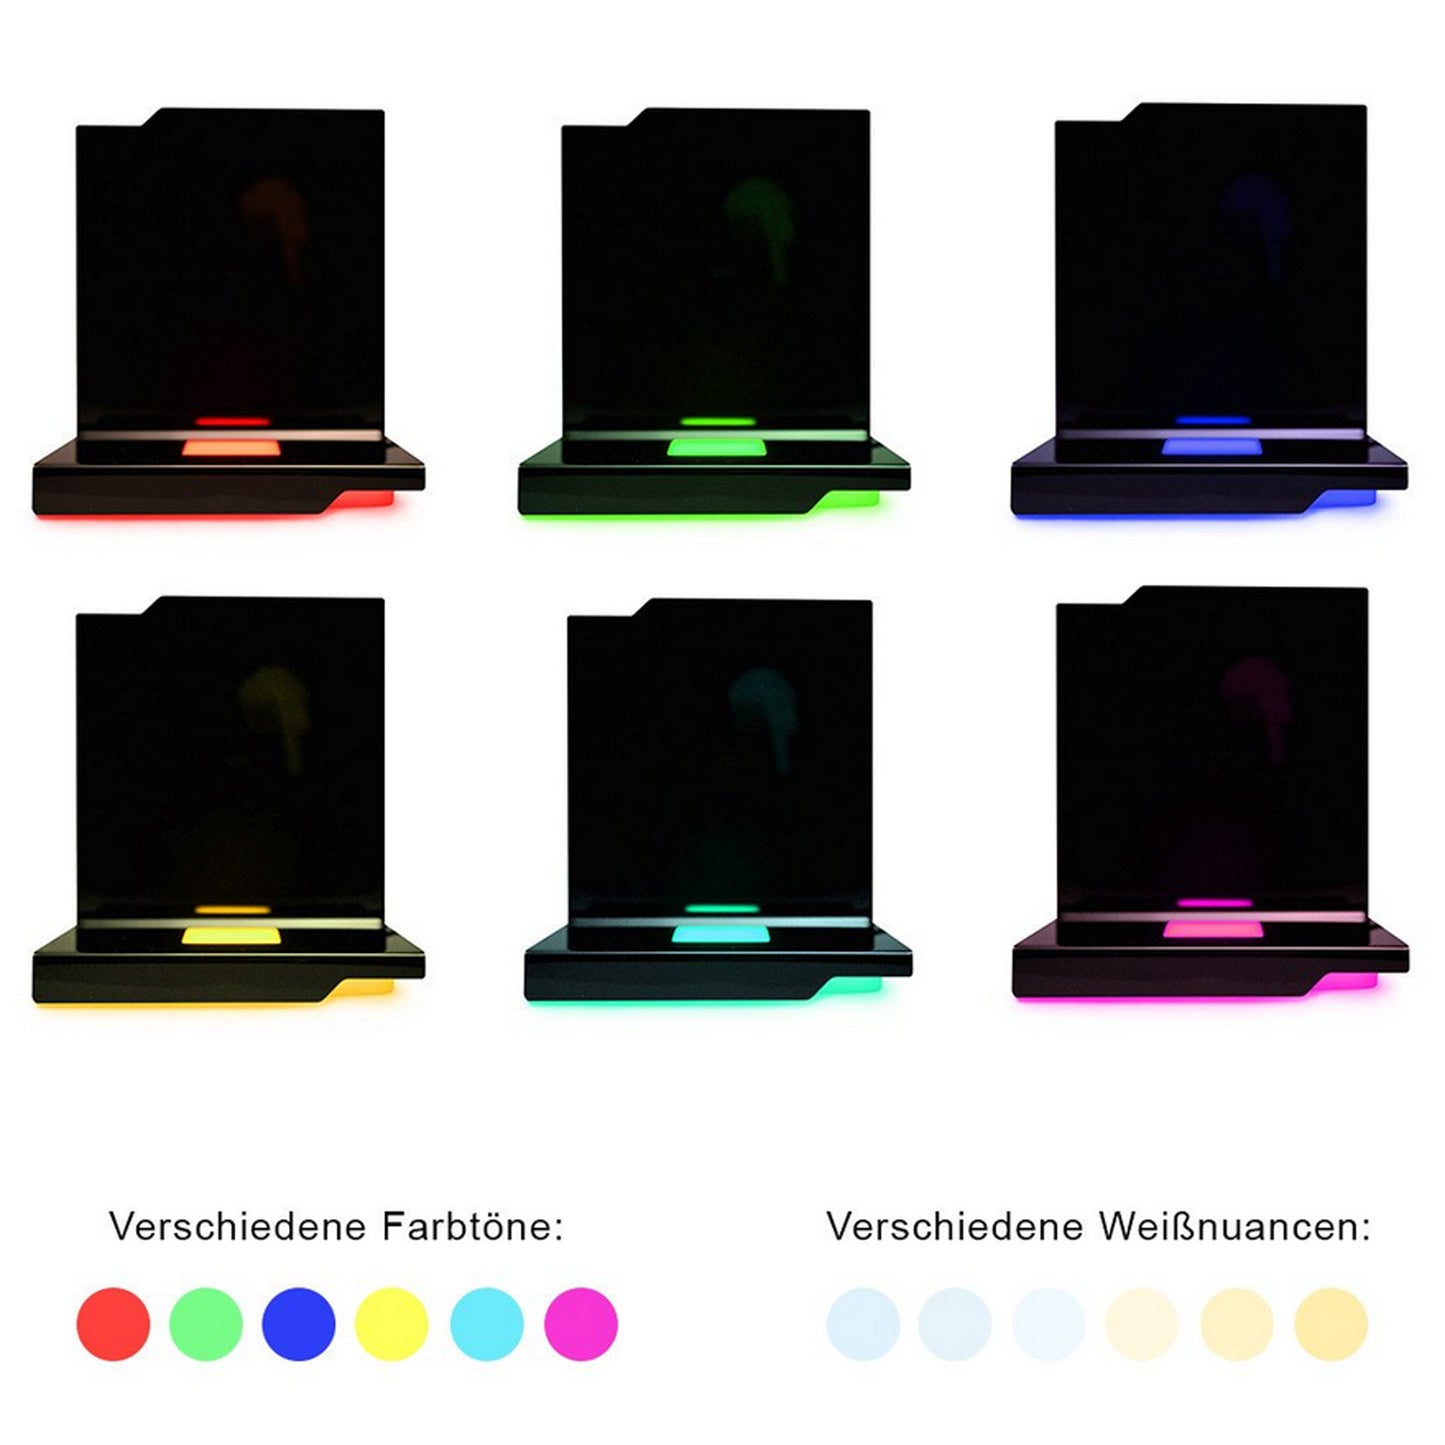 3D Fotos in Glas - Eisberg L mit Ouvertüre Beleuchtungselement